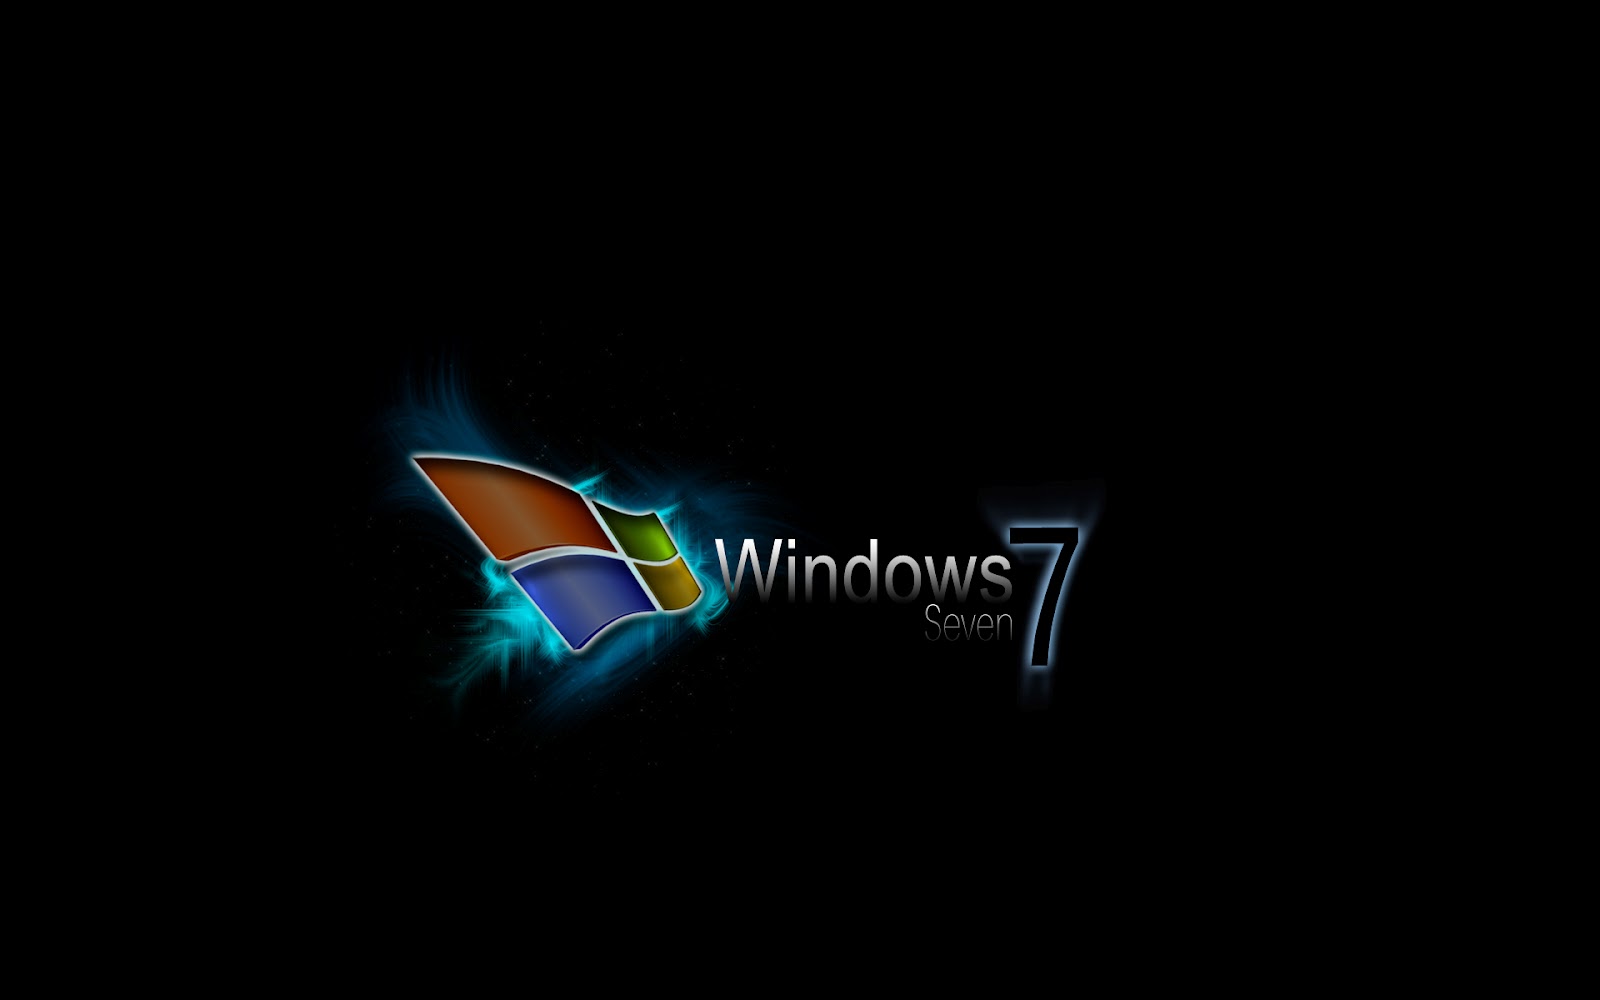 http://1.bp.blogspot.com/-6uXsWS9rl7M/T8ju77EaDjI/AAAAAAAAAKw/GDFQragU8RU/s1600/windows-7-hd-wallpaper-5.jpg